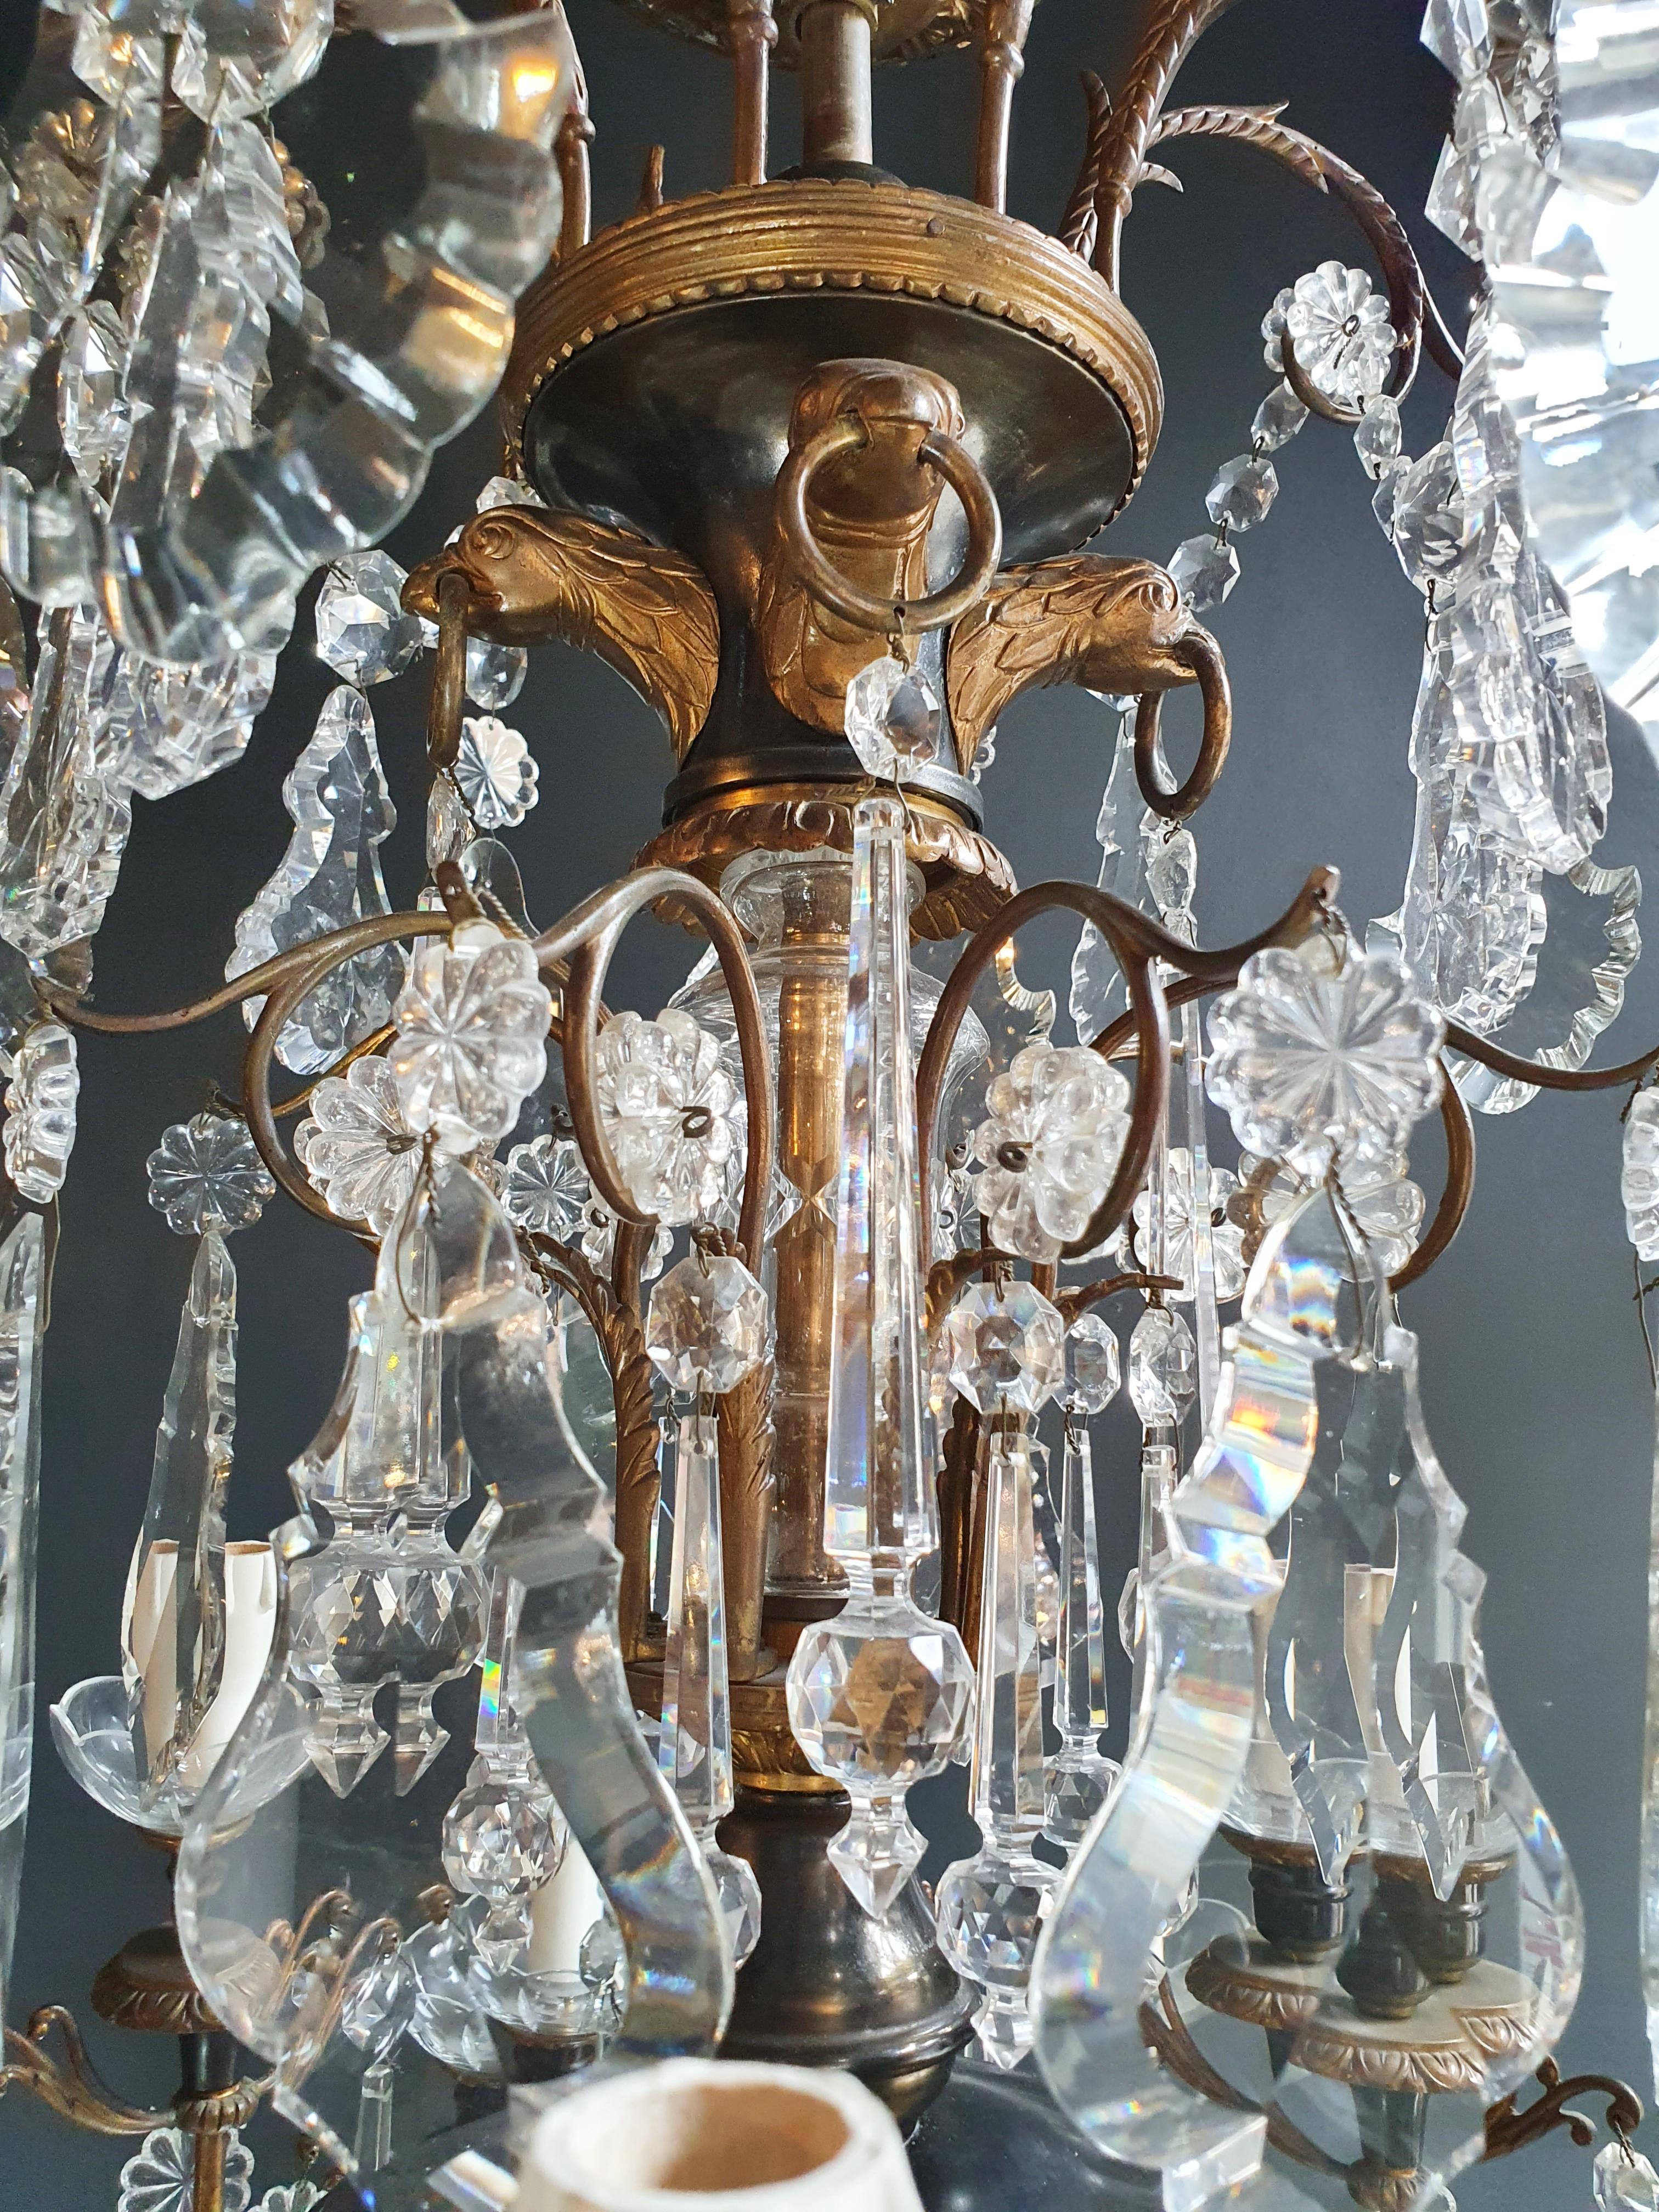 Hand-Knotted Brass Crystal Chandelier Antique Ceiling Lamp Lustre Art Nouveau Lamp